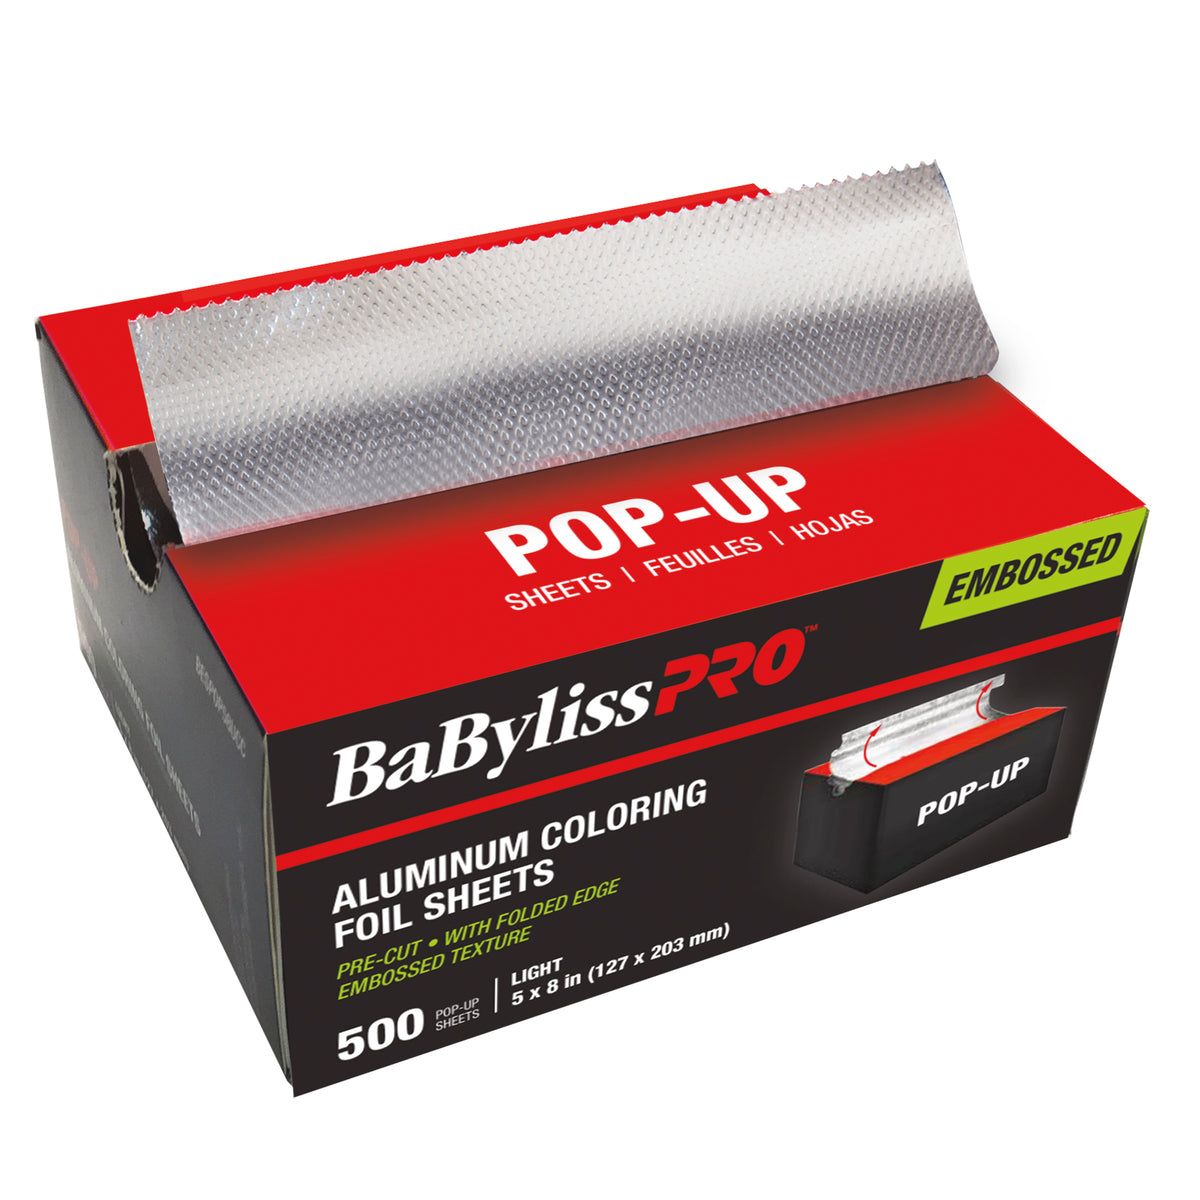 BaBylissPRO Pop-up Aluminum Coloring Foil, 500 Sheets